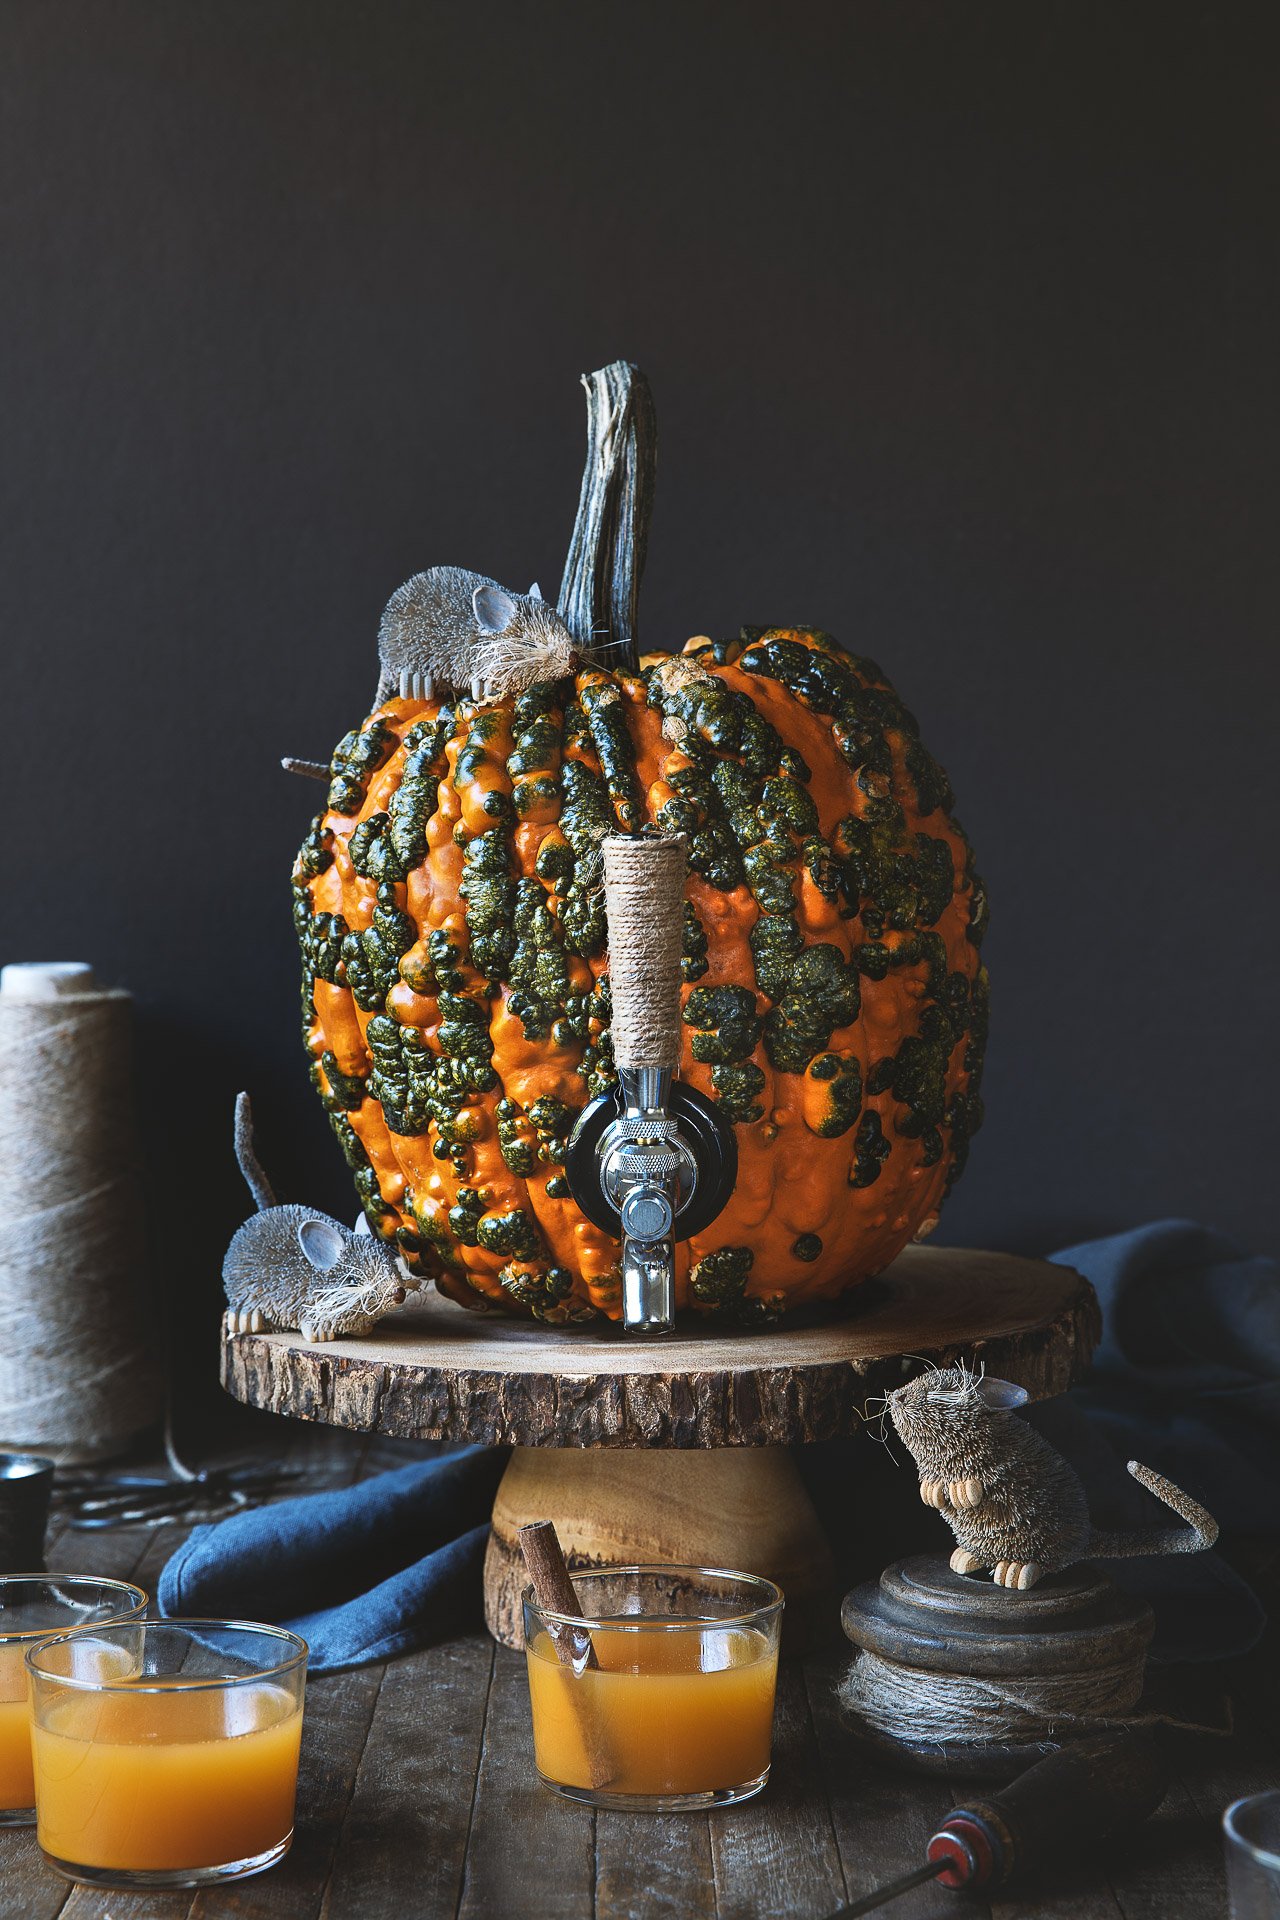 Pumpkin keg tap kit for your next Halloween party!